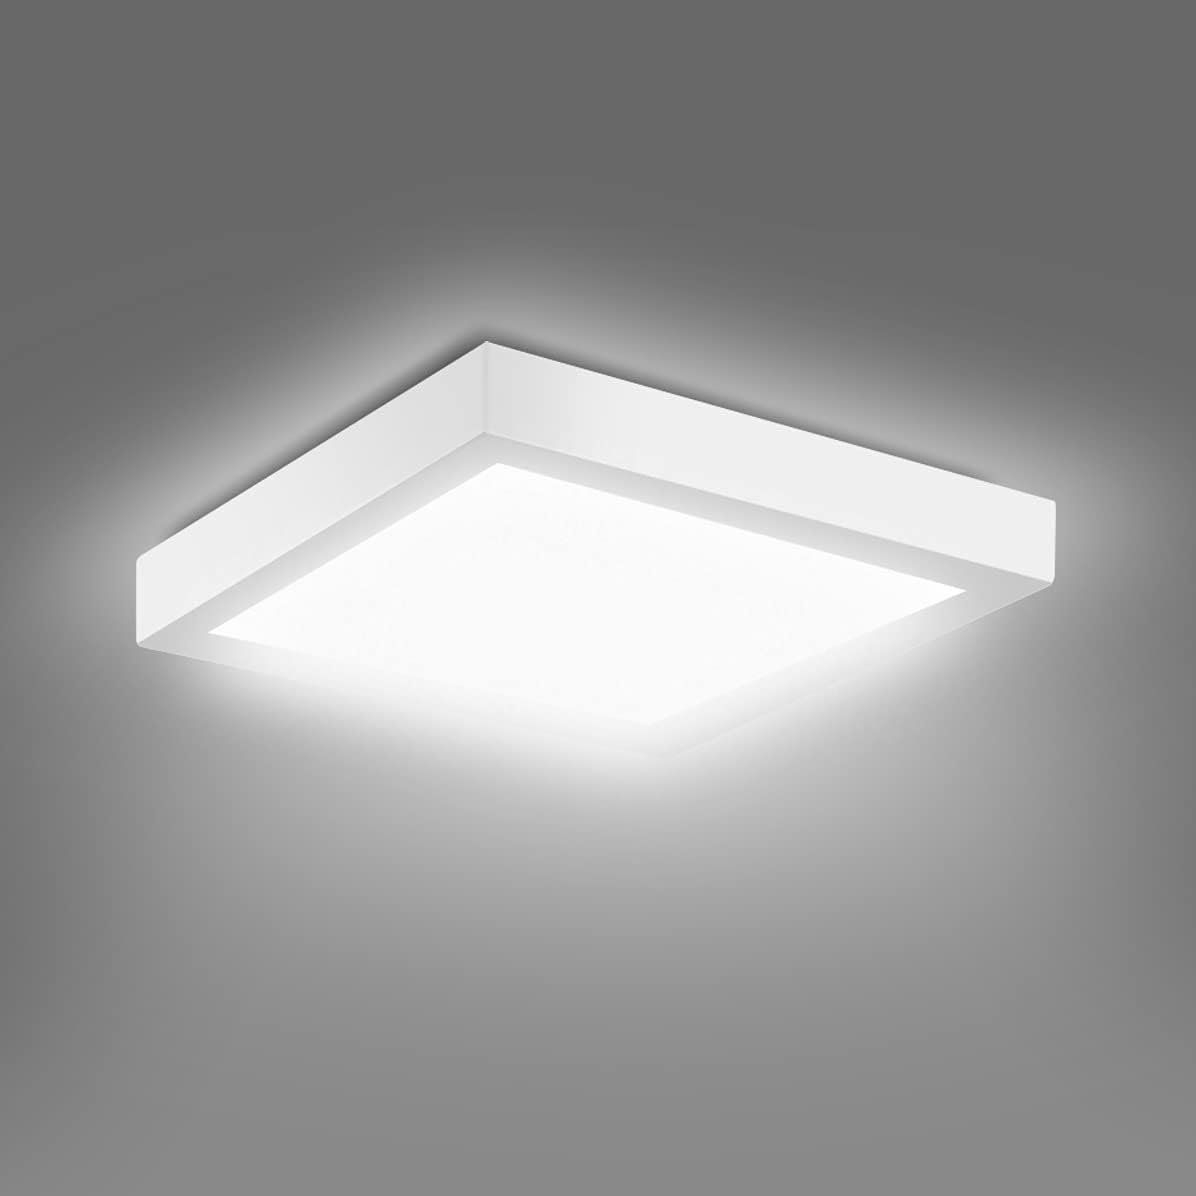 LED Ceiling Lights, 12W Modern Square Flush LED Ceiling, LED Panel Ceiling Lamp for Living Room, Kitchen, Bulkhead, and Utility Room